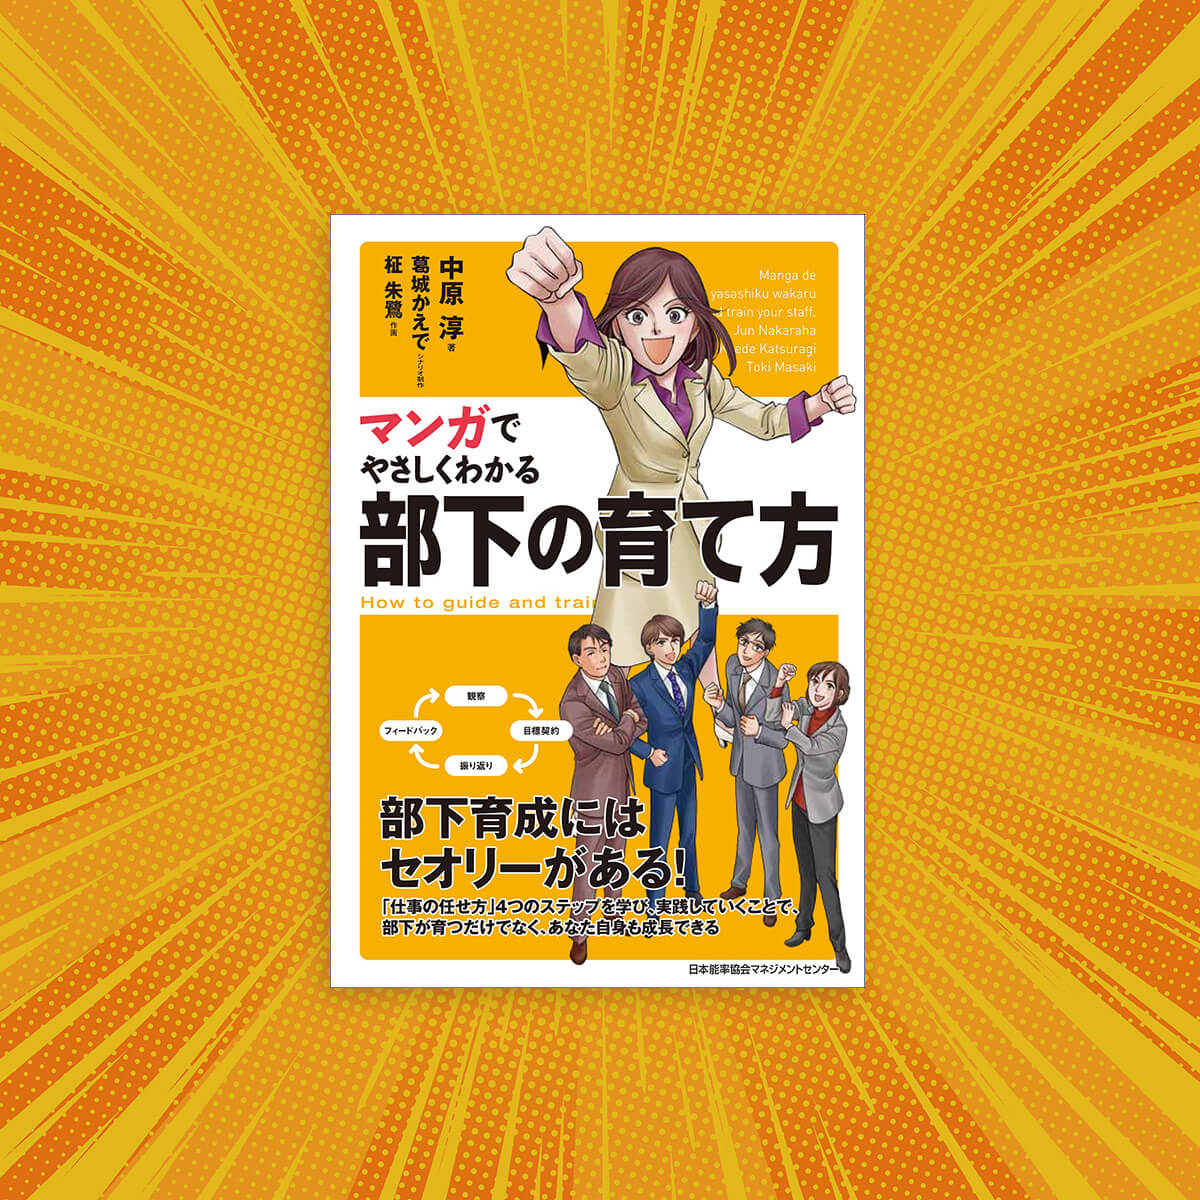 Easy reading through Manga | Effective Leadership